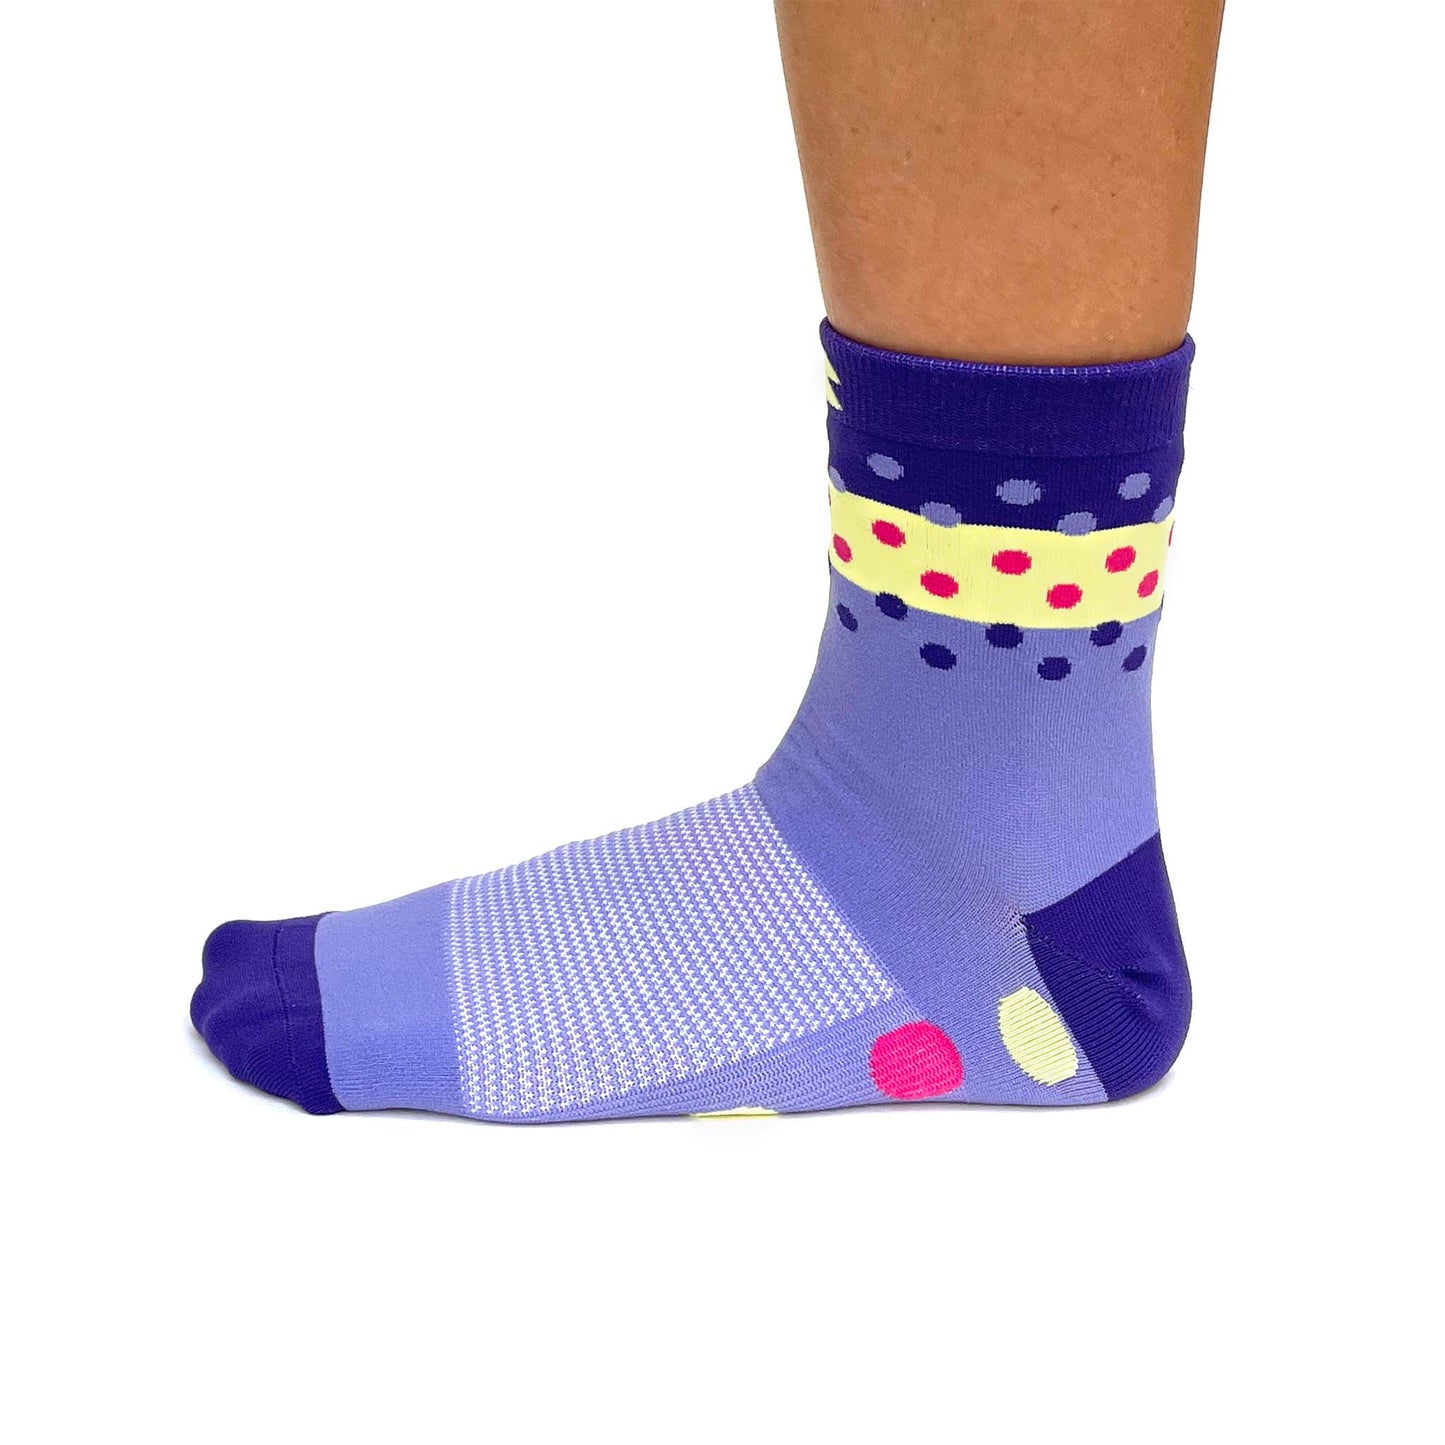 Mix Match Socks